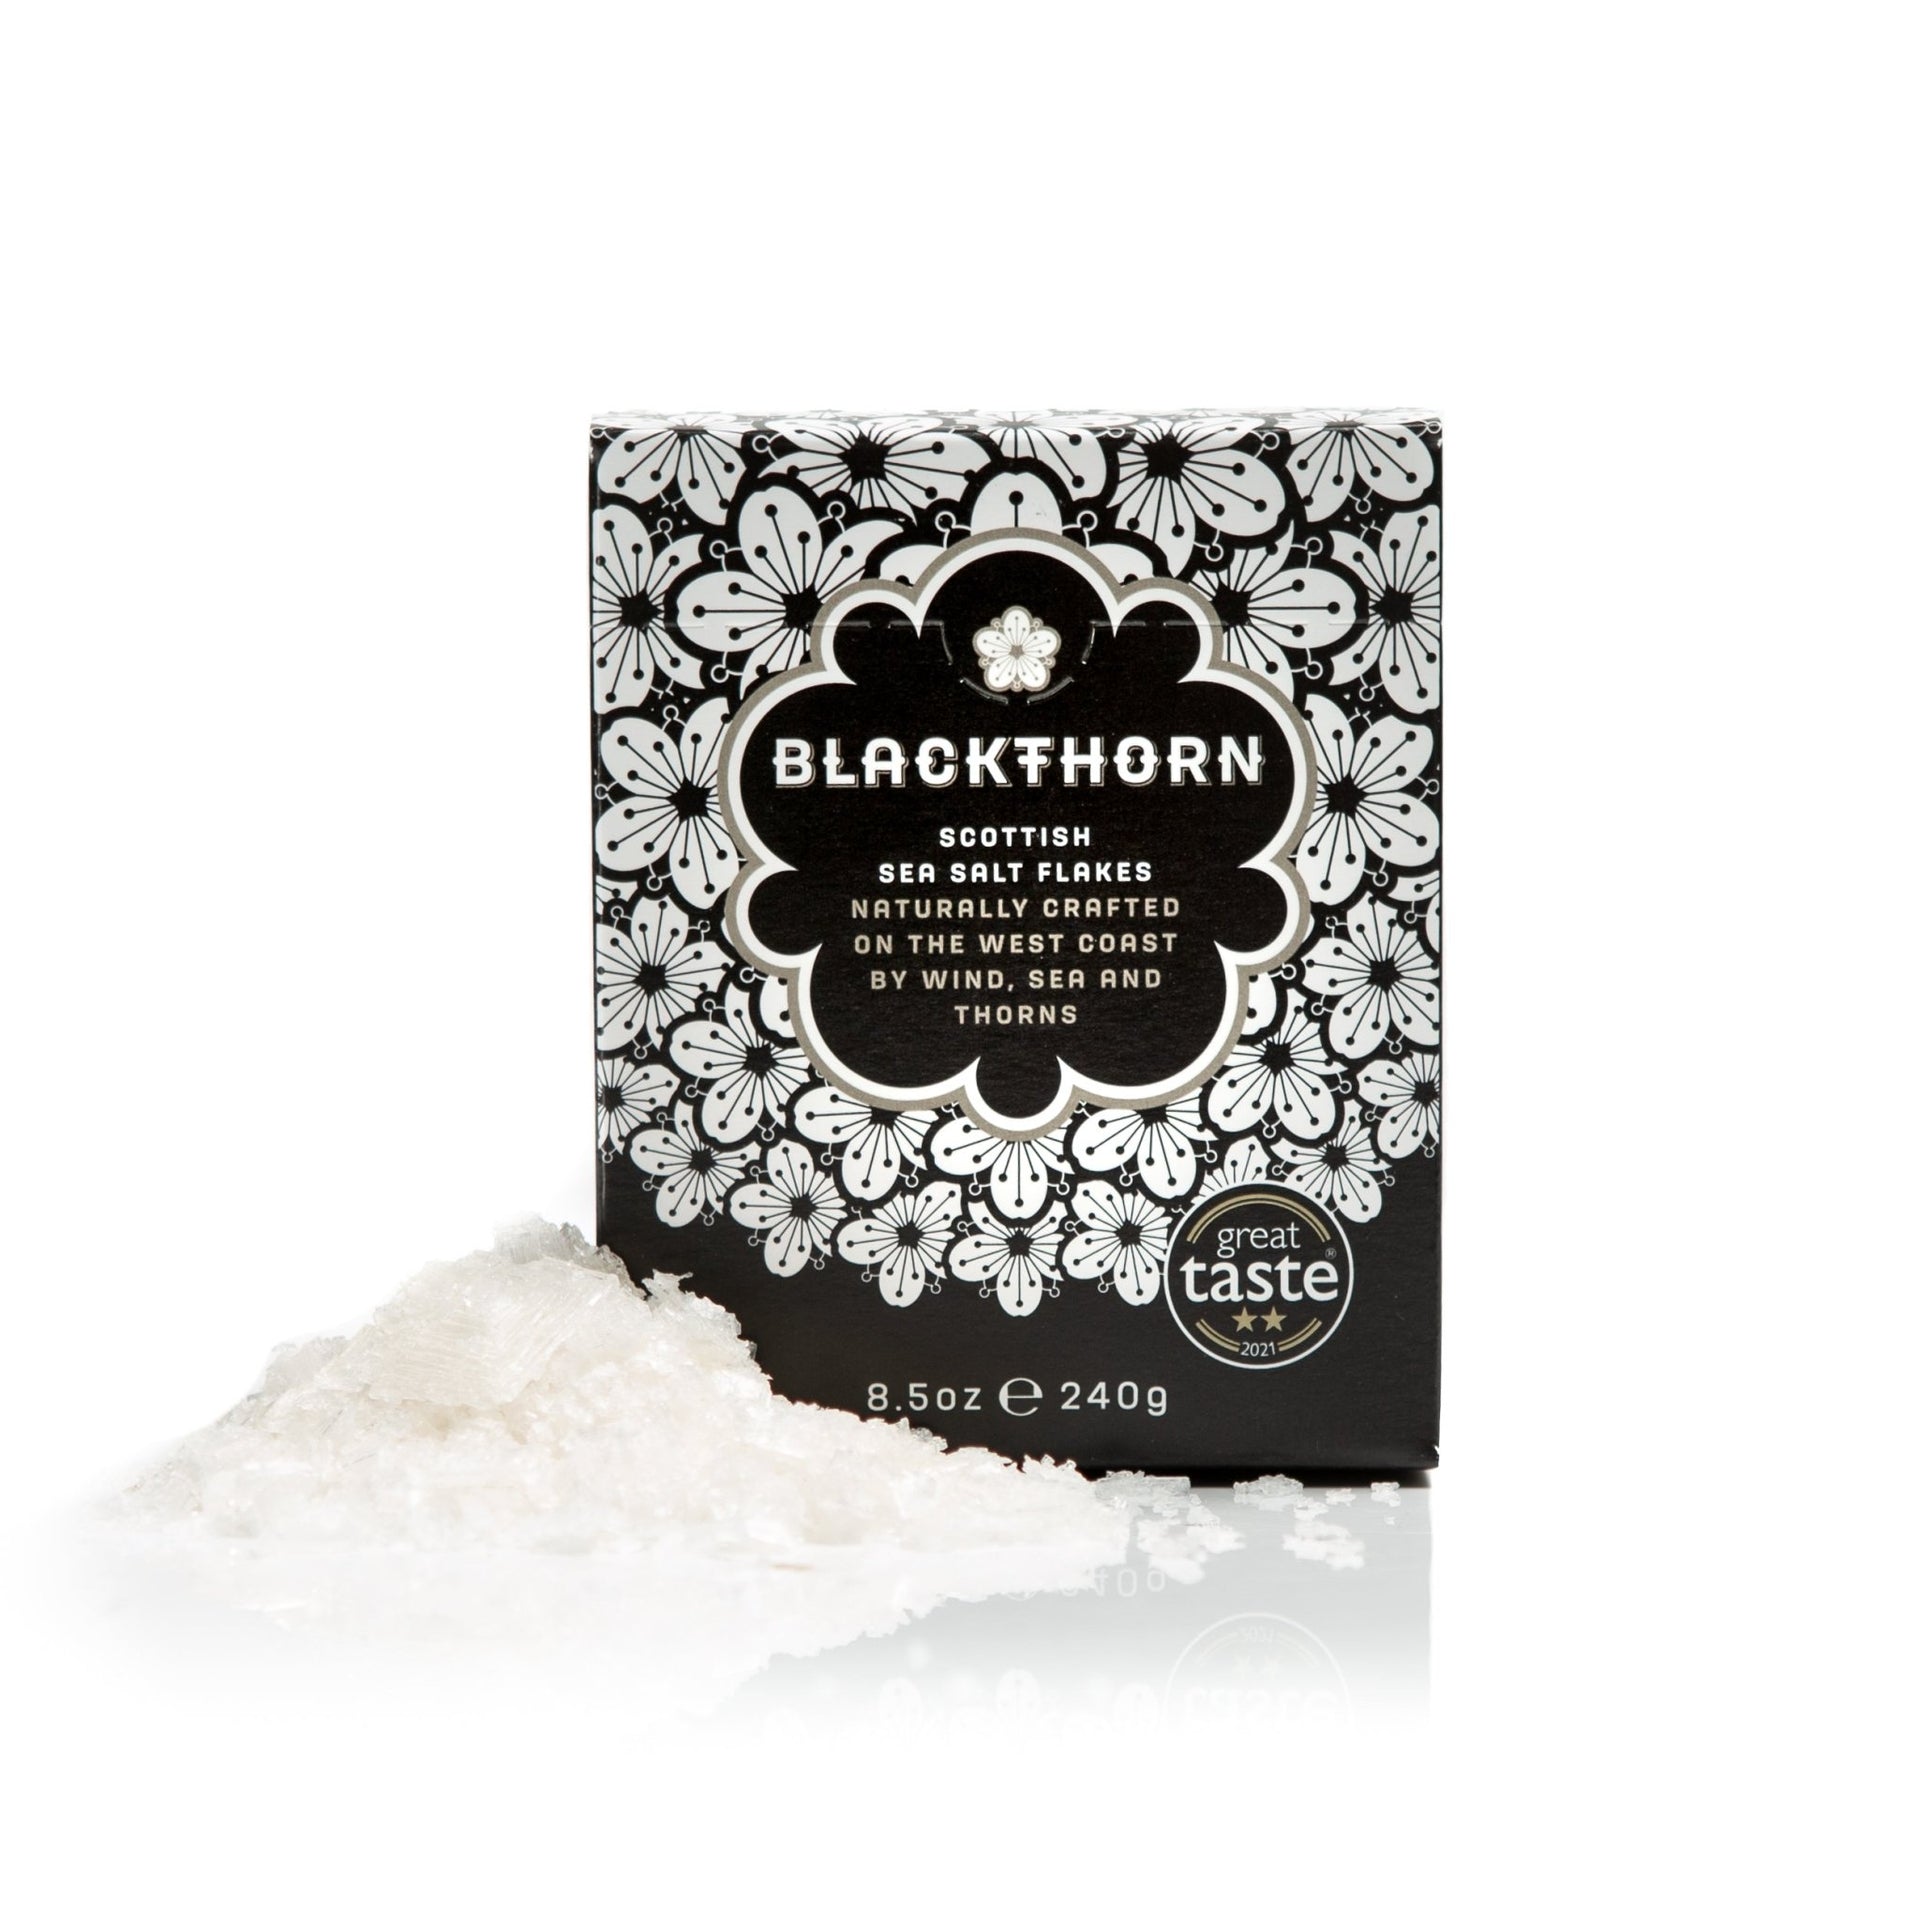 Blackthorn Sea Salt Flakes 240g - Made Scotland